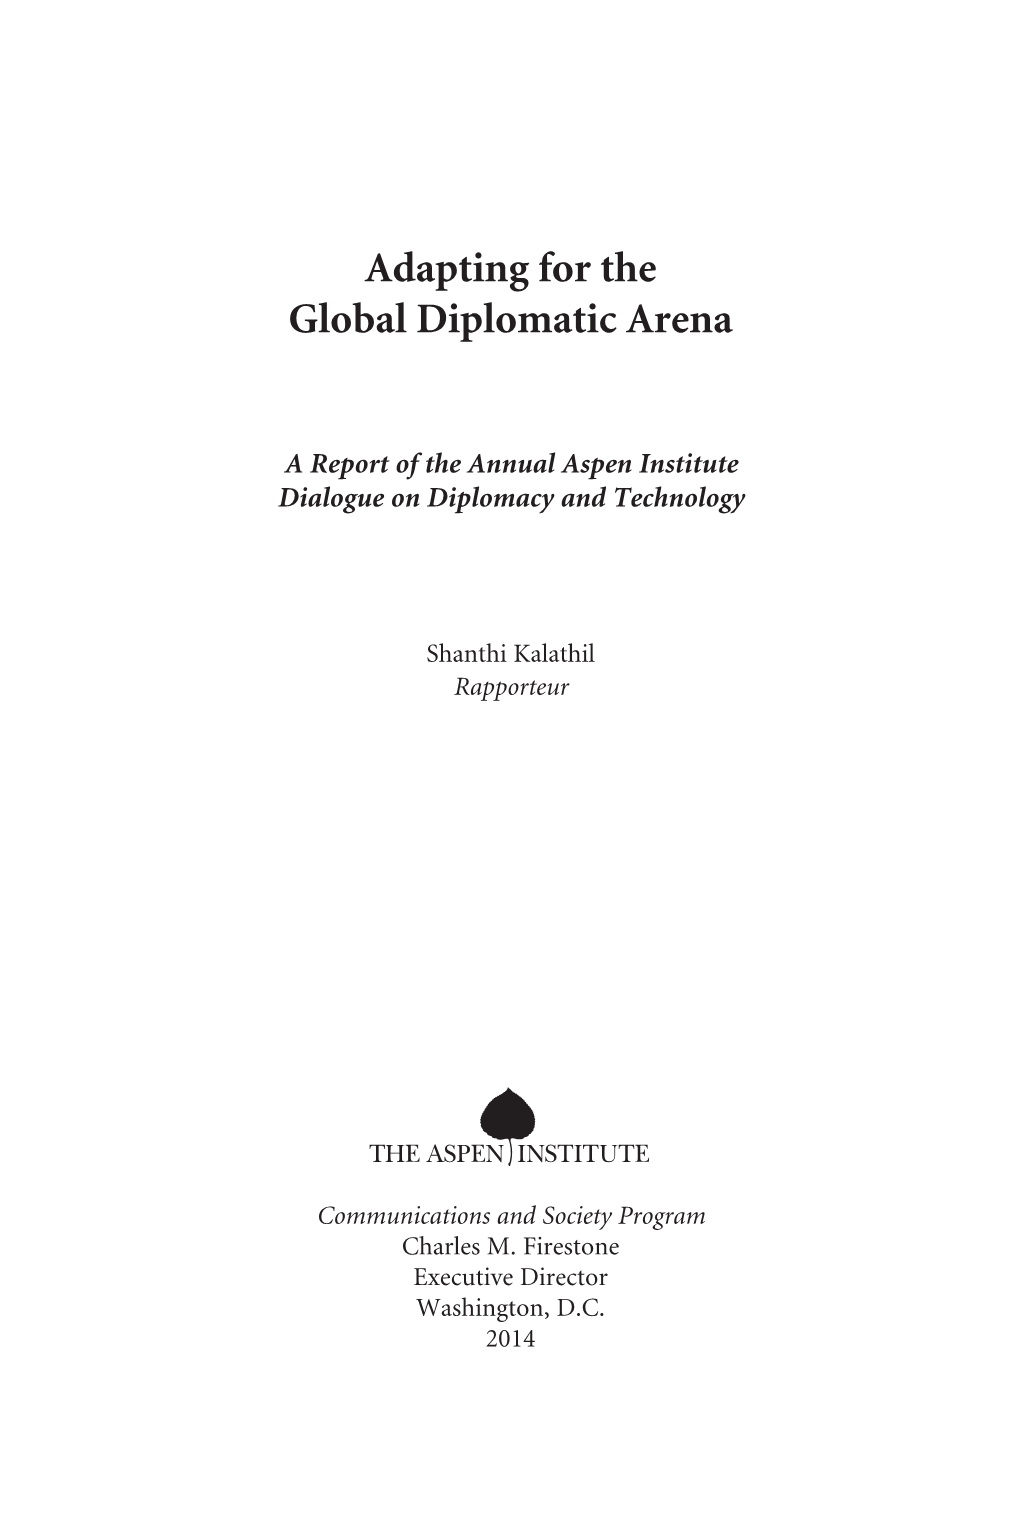 Adapting for the Global Diplomatic Arena